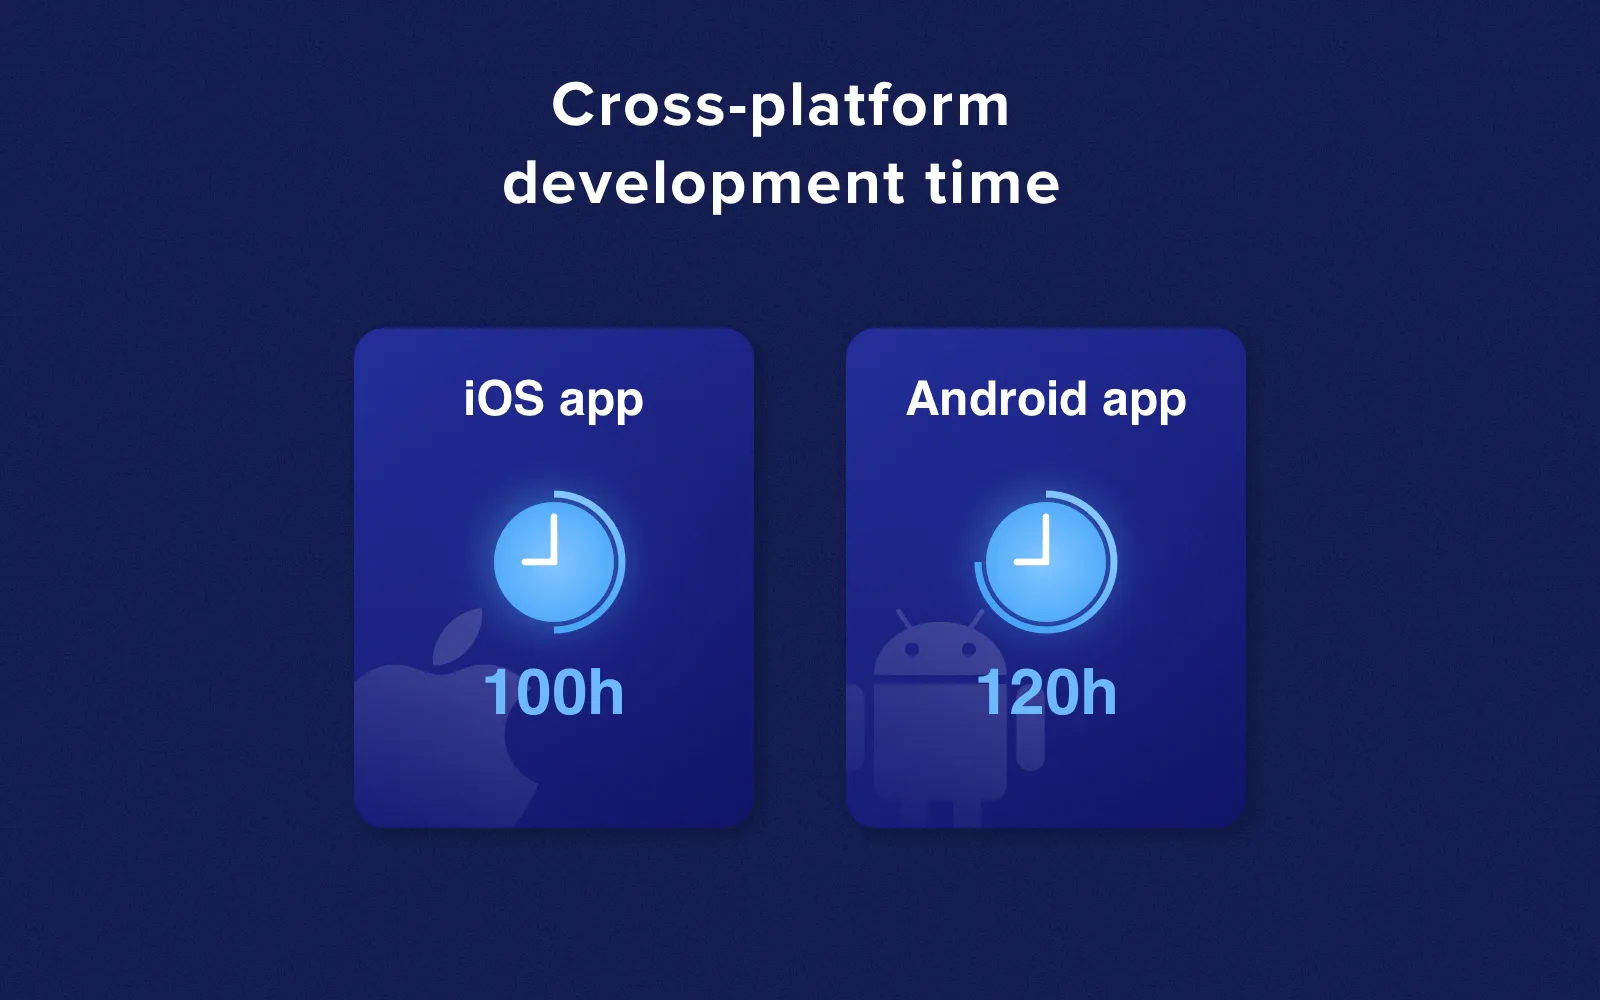 Cross-platform development time